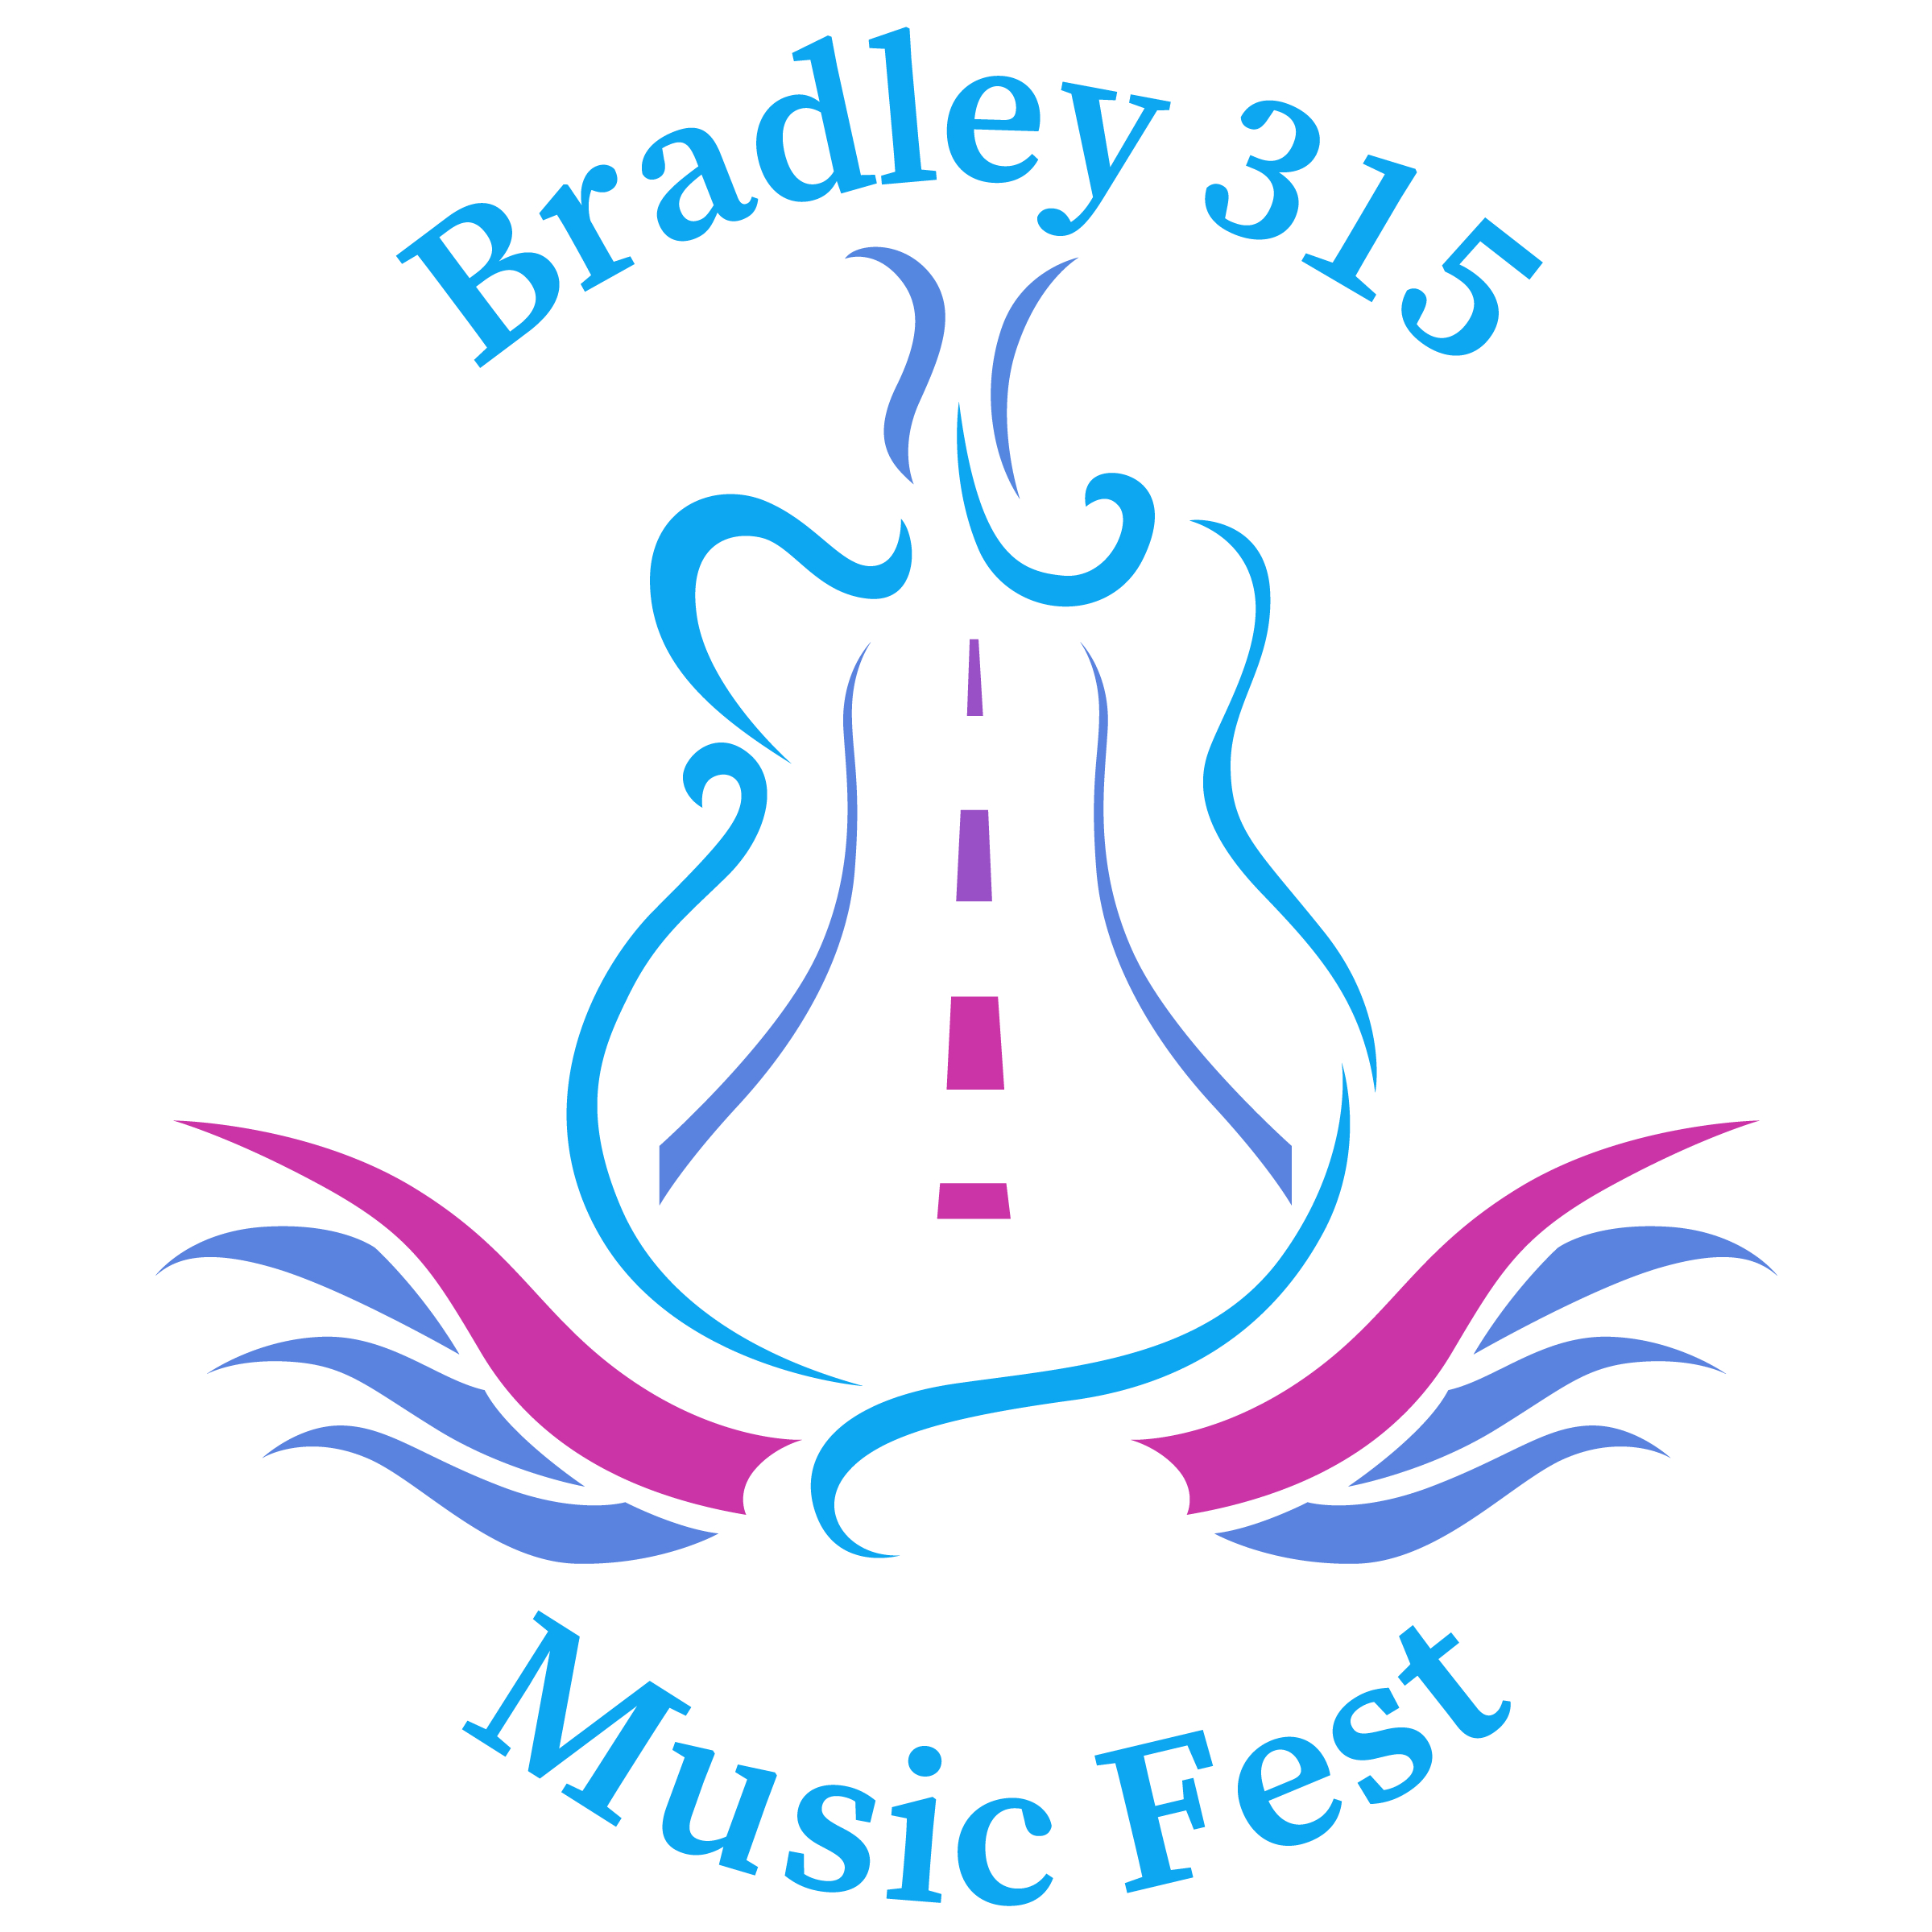 Bradley 315 Music Fest - Hosted by the Village of Bradley